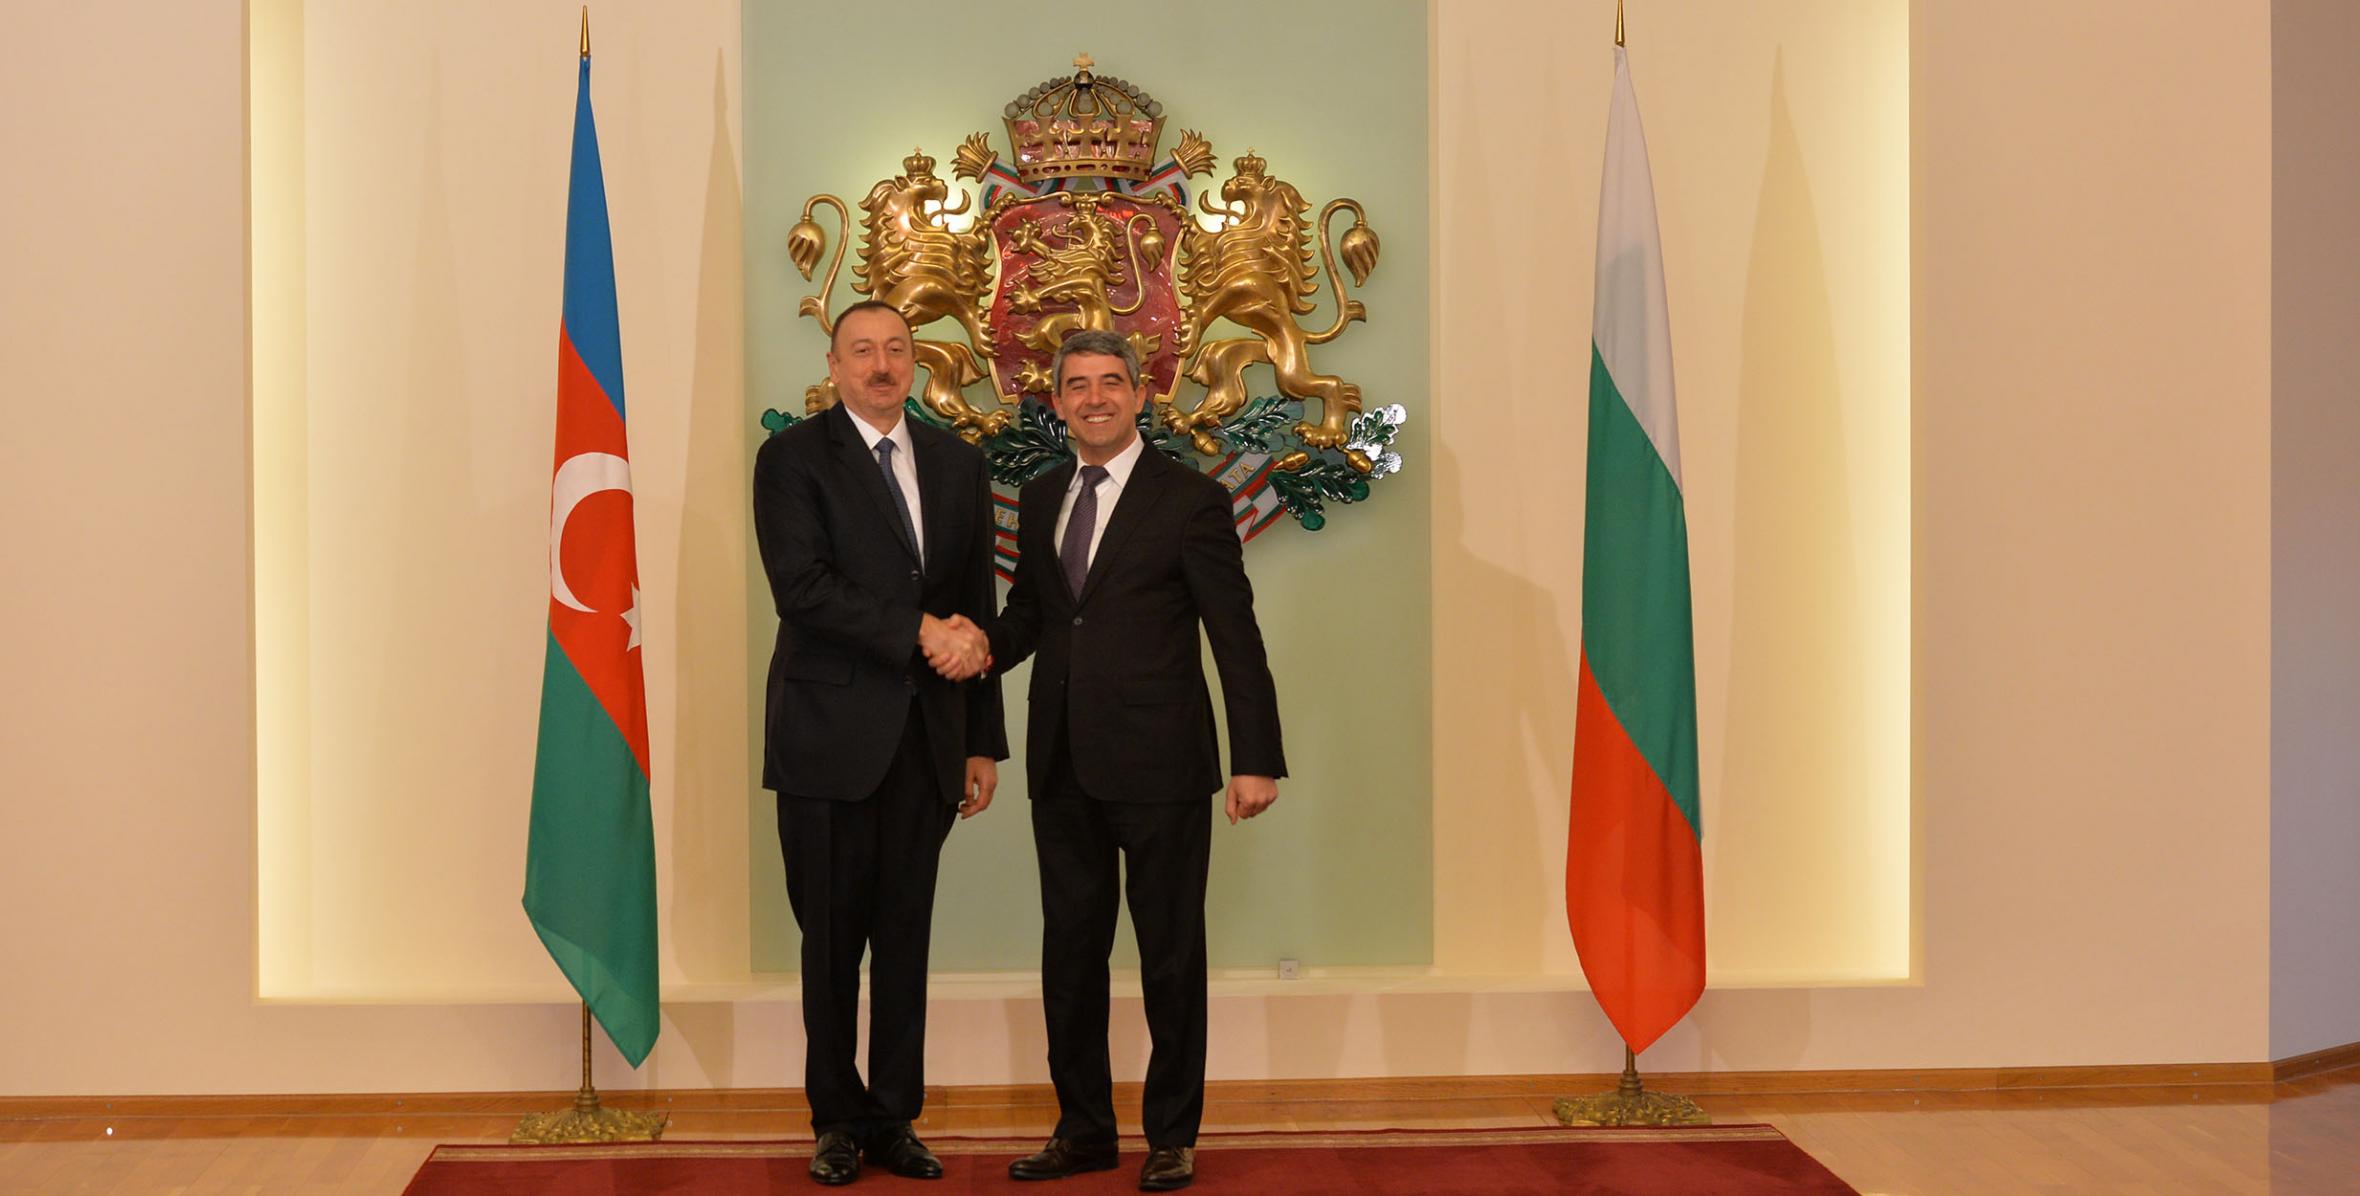 Ilham Aliyev and President of Bulgaria Rosen Plevneliev held a one-on-one meeting